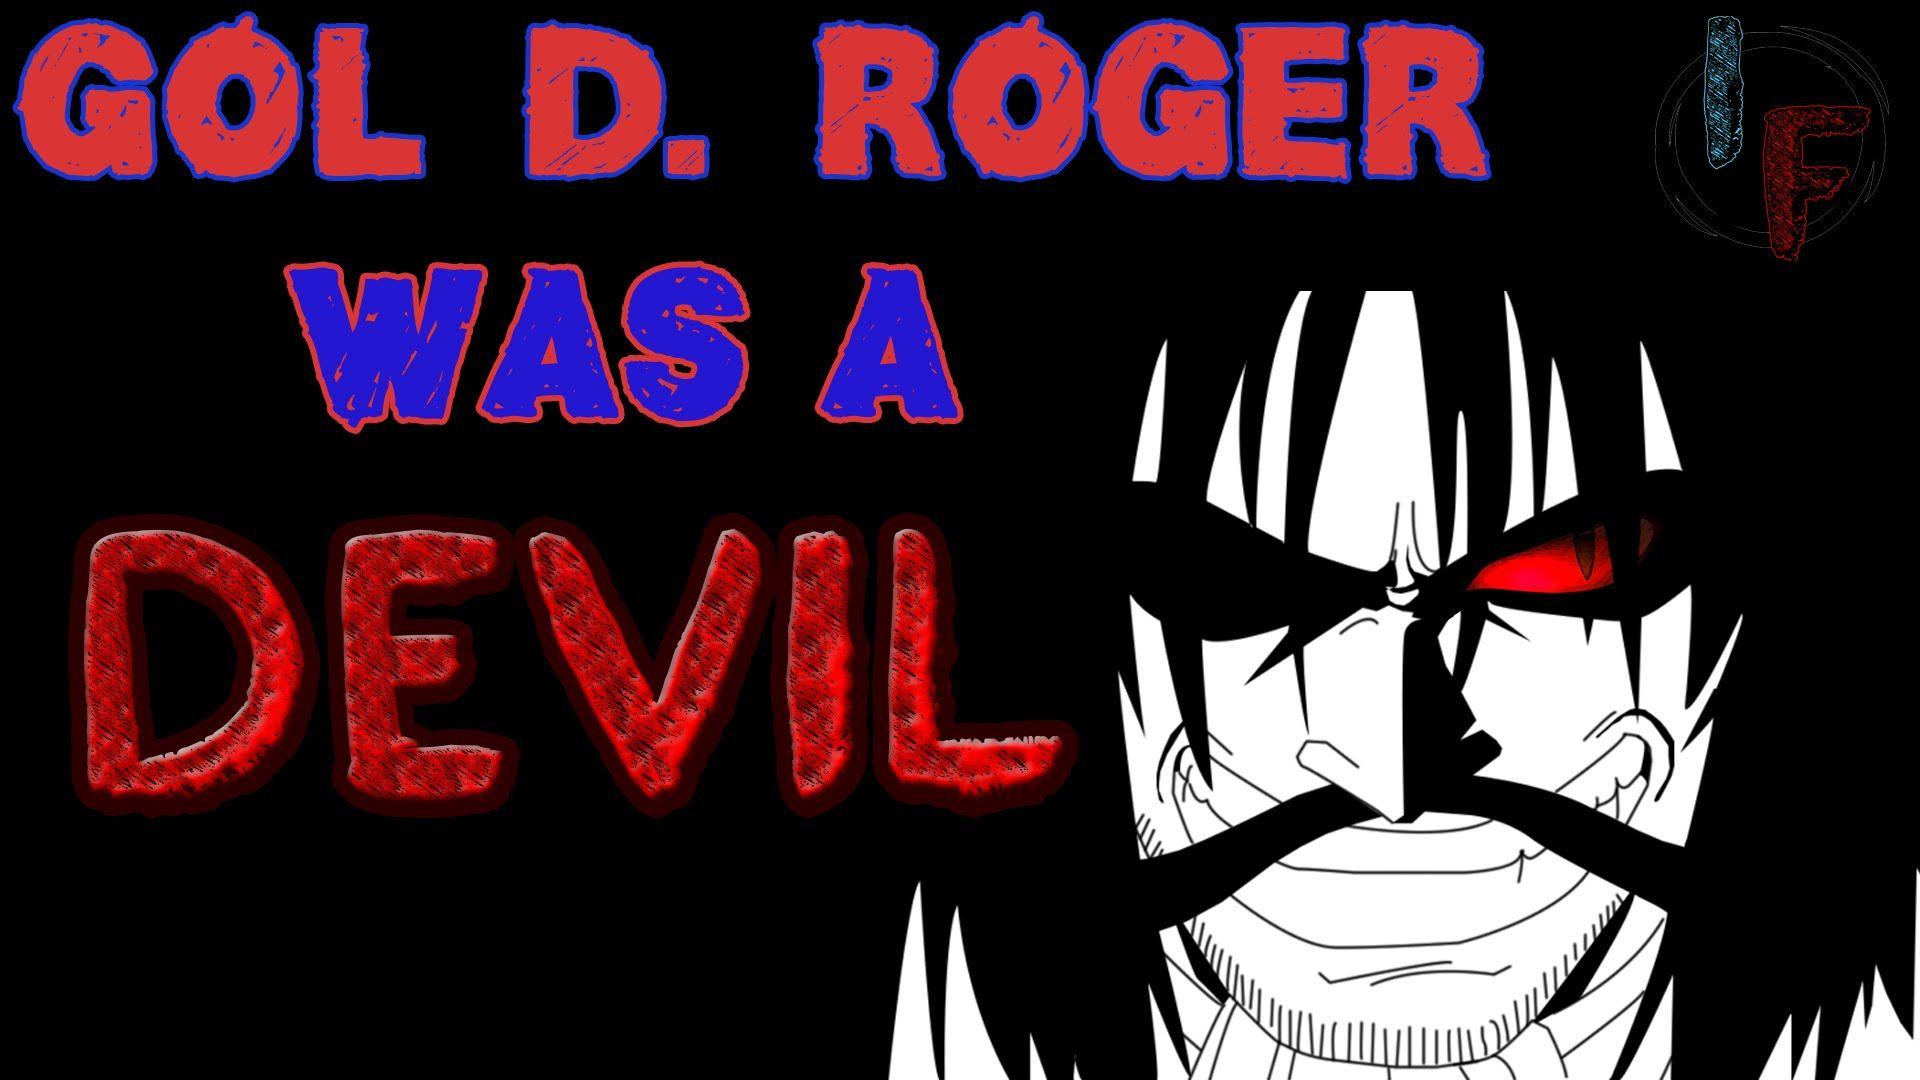 Gol D. Roger was a Devil??